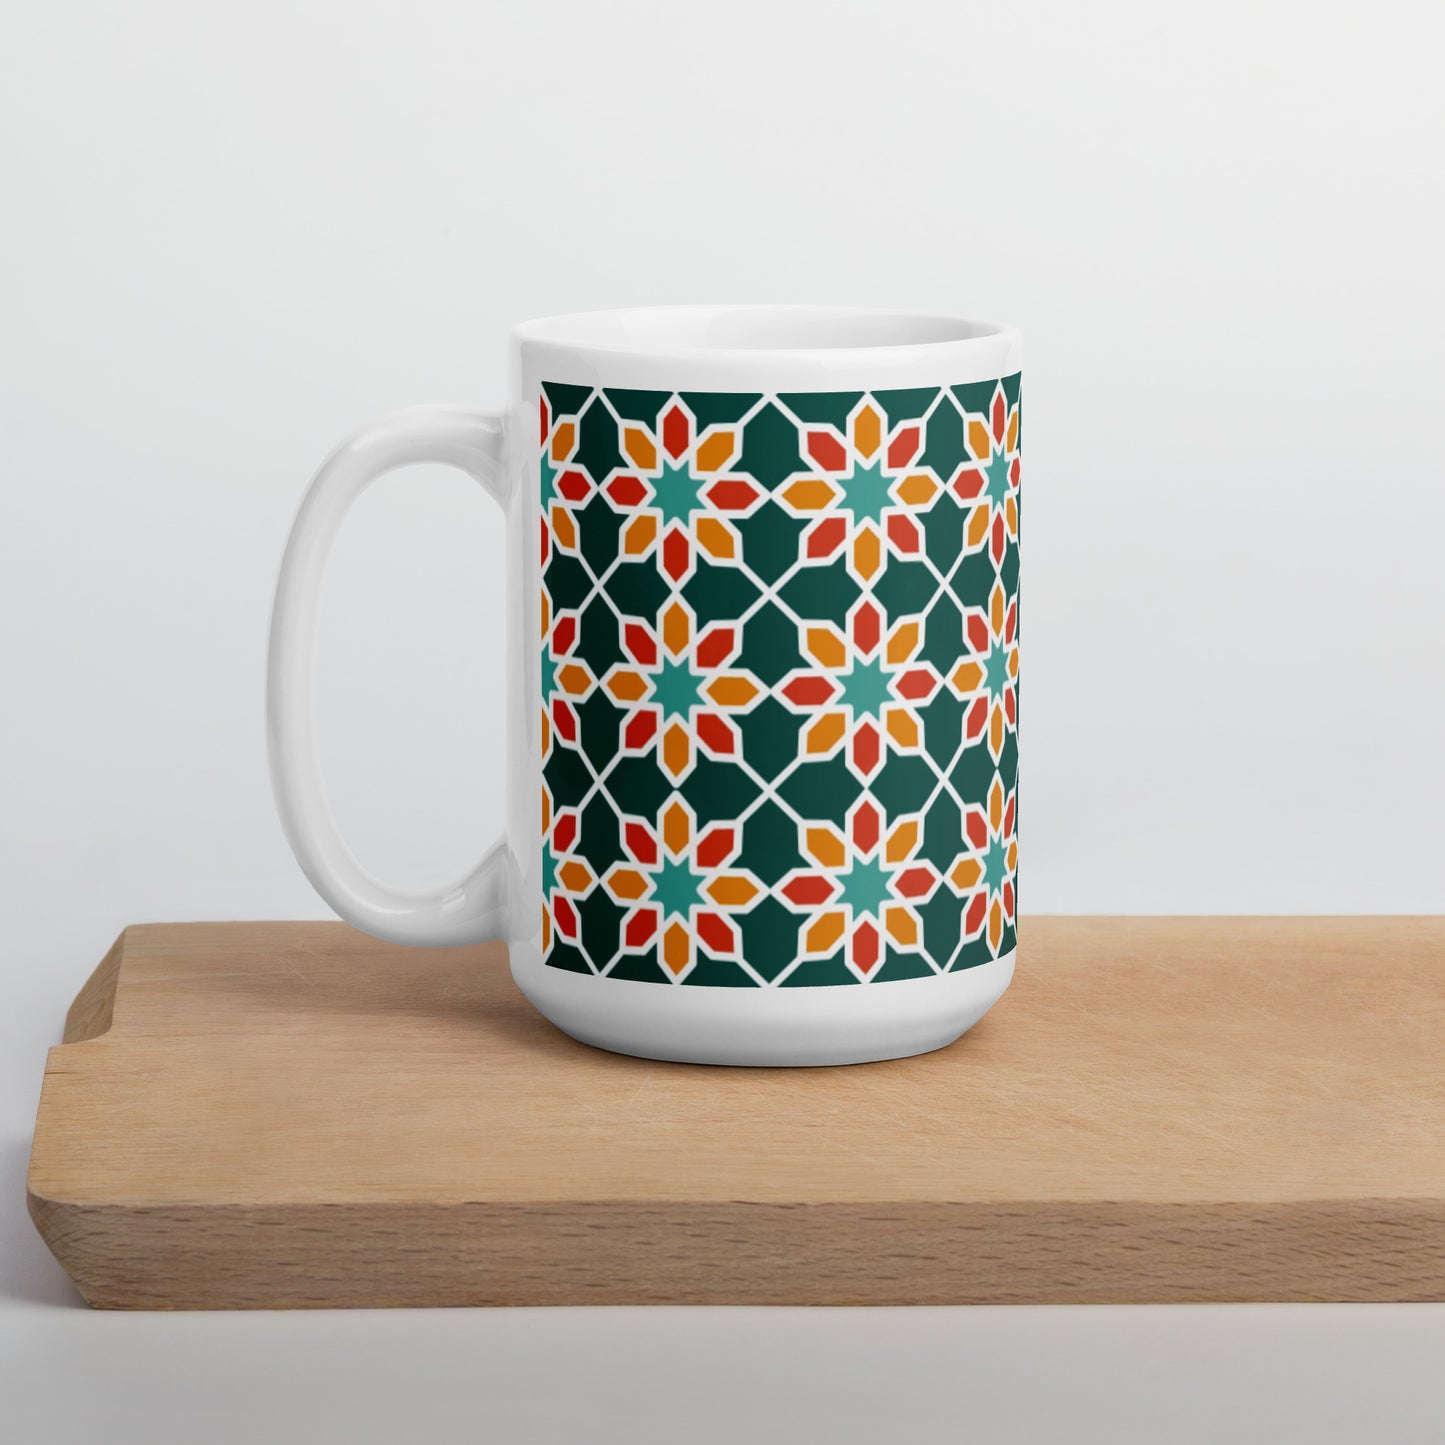 White glossy mug - Geometric Desert Daisy in Green